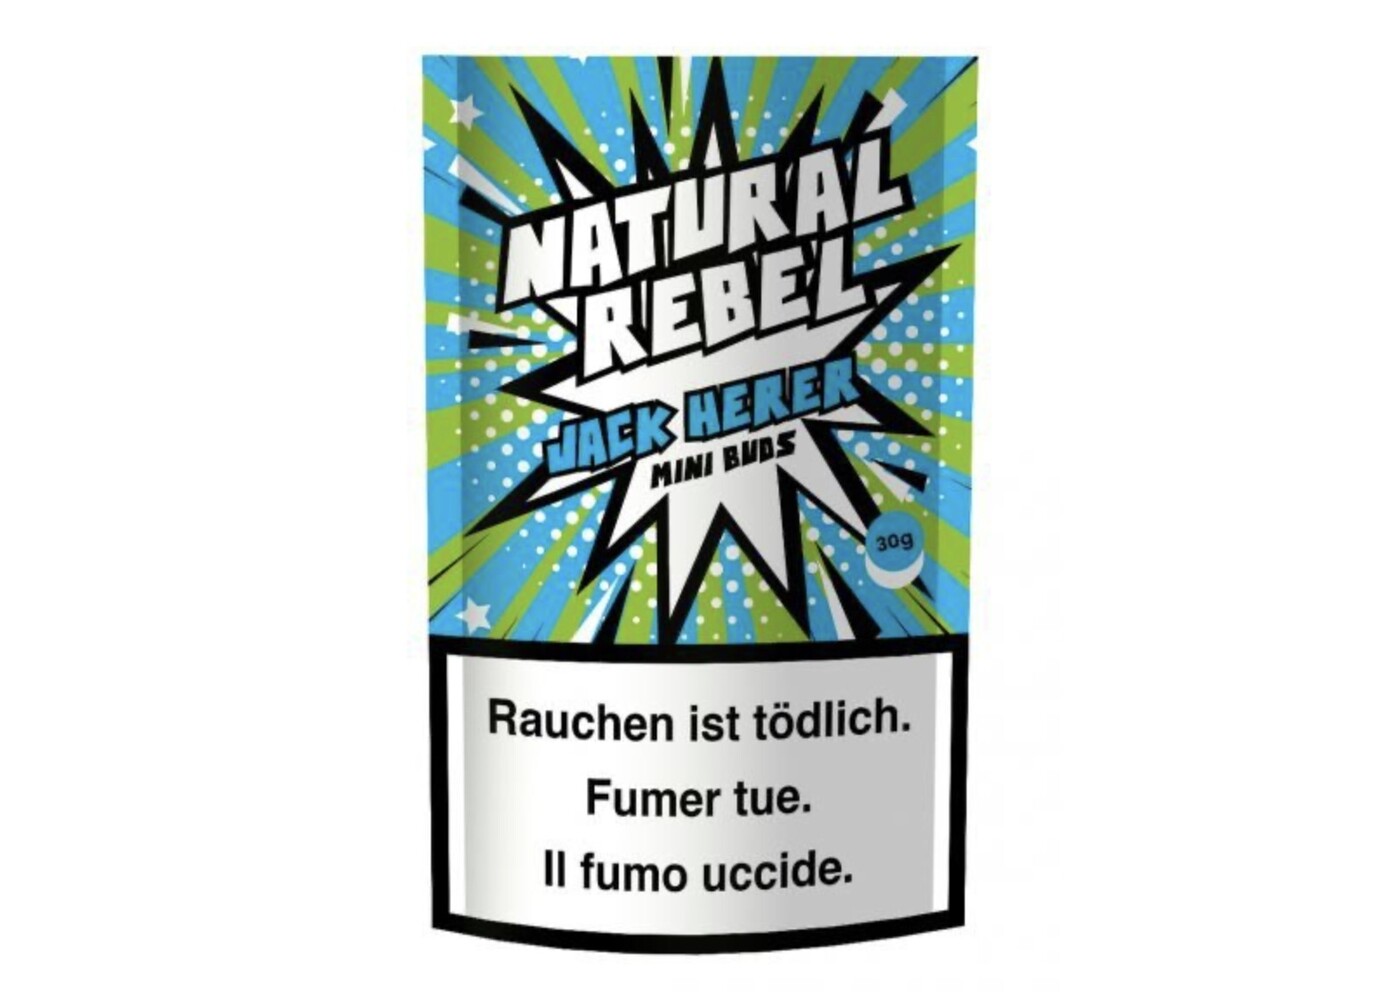 Bergblüten NATURAL REBEL CBD Mini Buds Jack Herer 30g